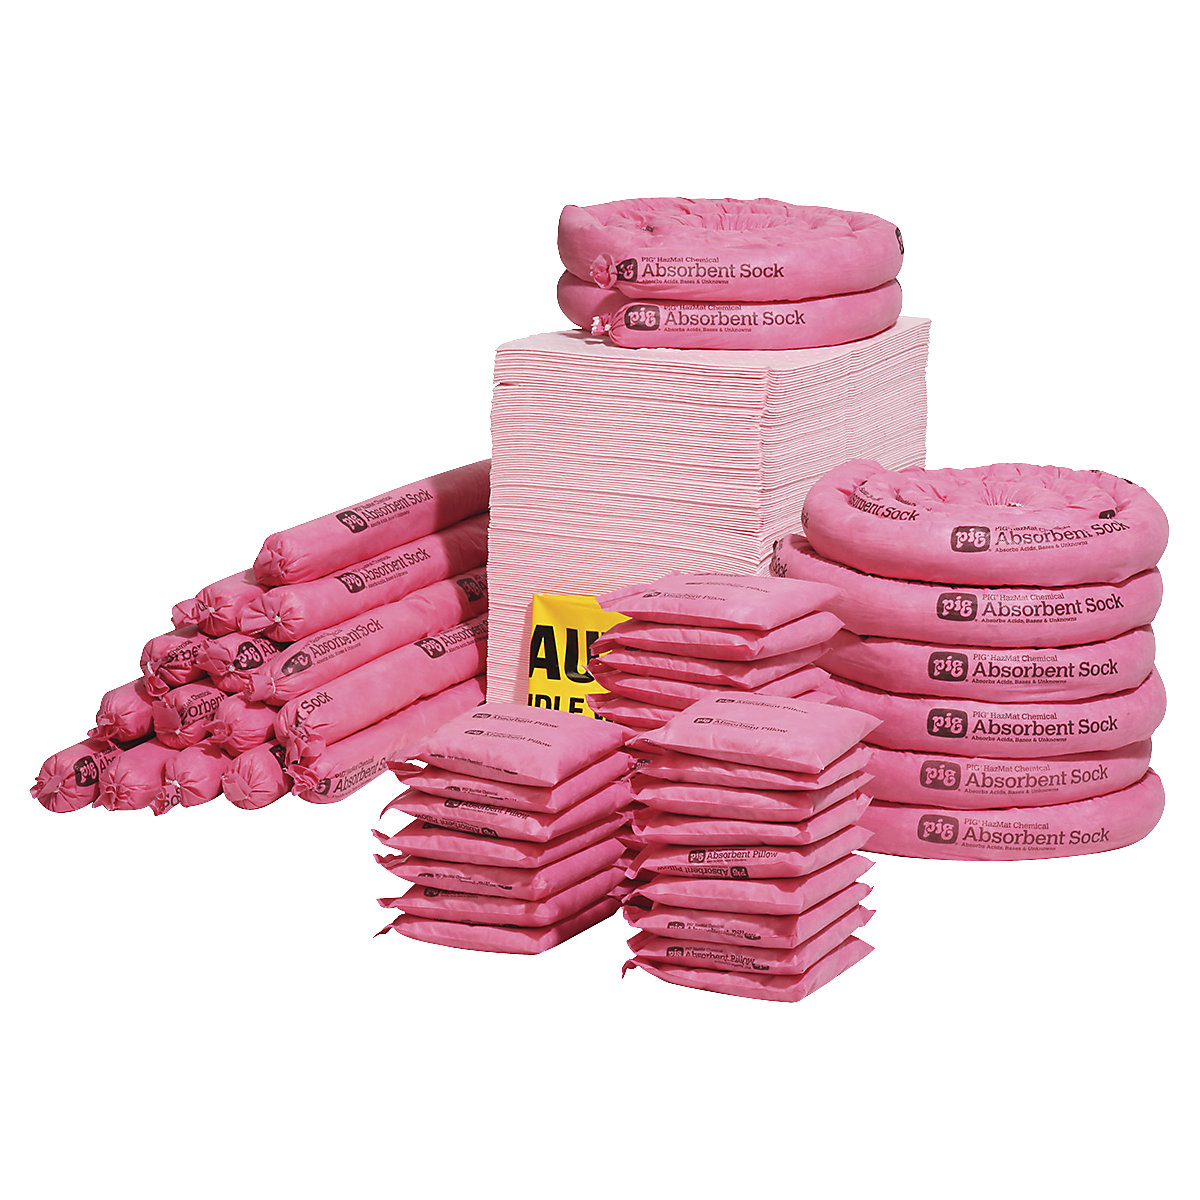 Refill for emergency kit, large – PIG